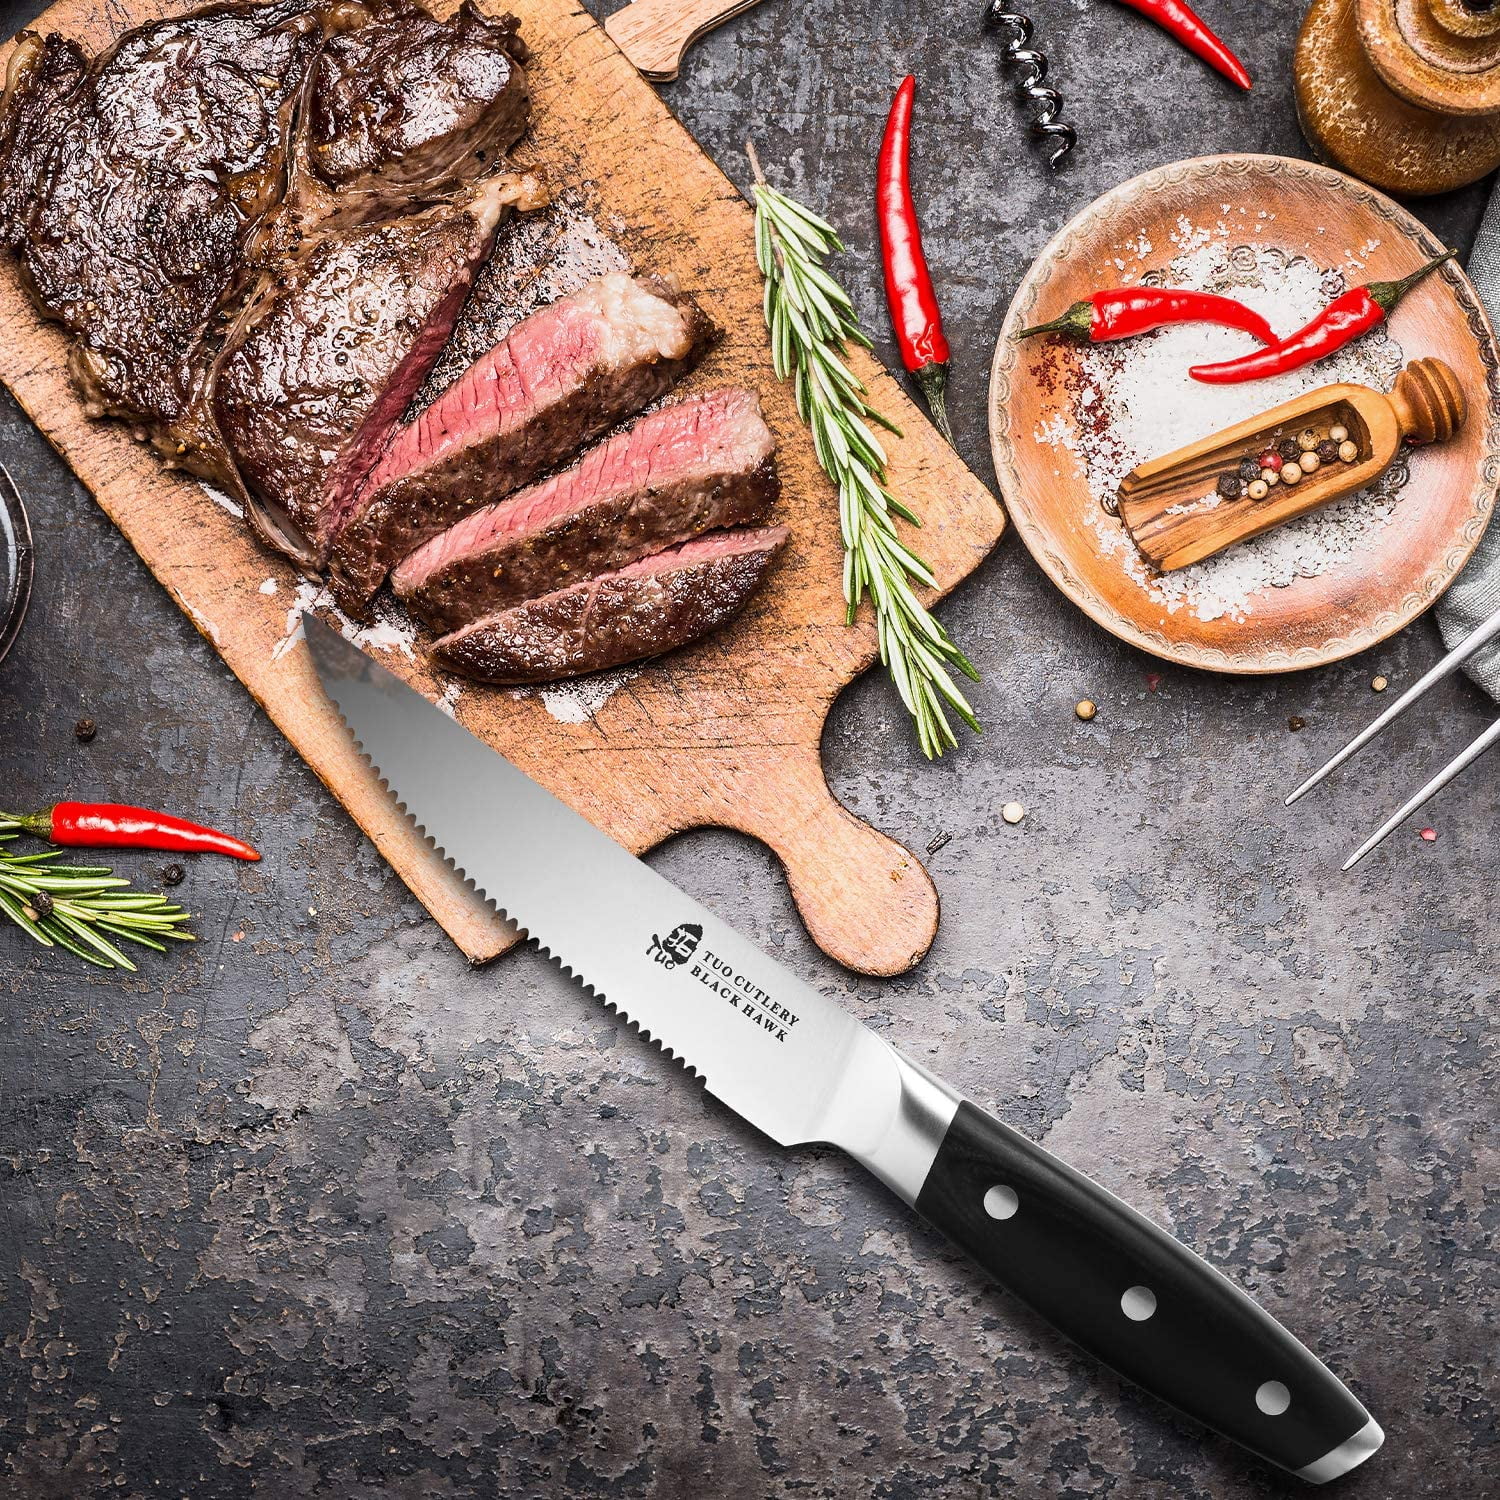 Viking Professional 4.5-Inch Steak Knife – Domaci